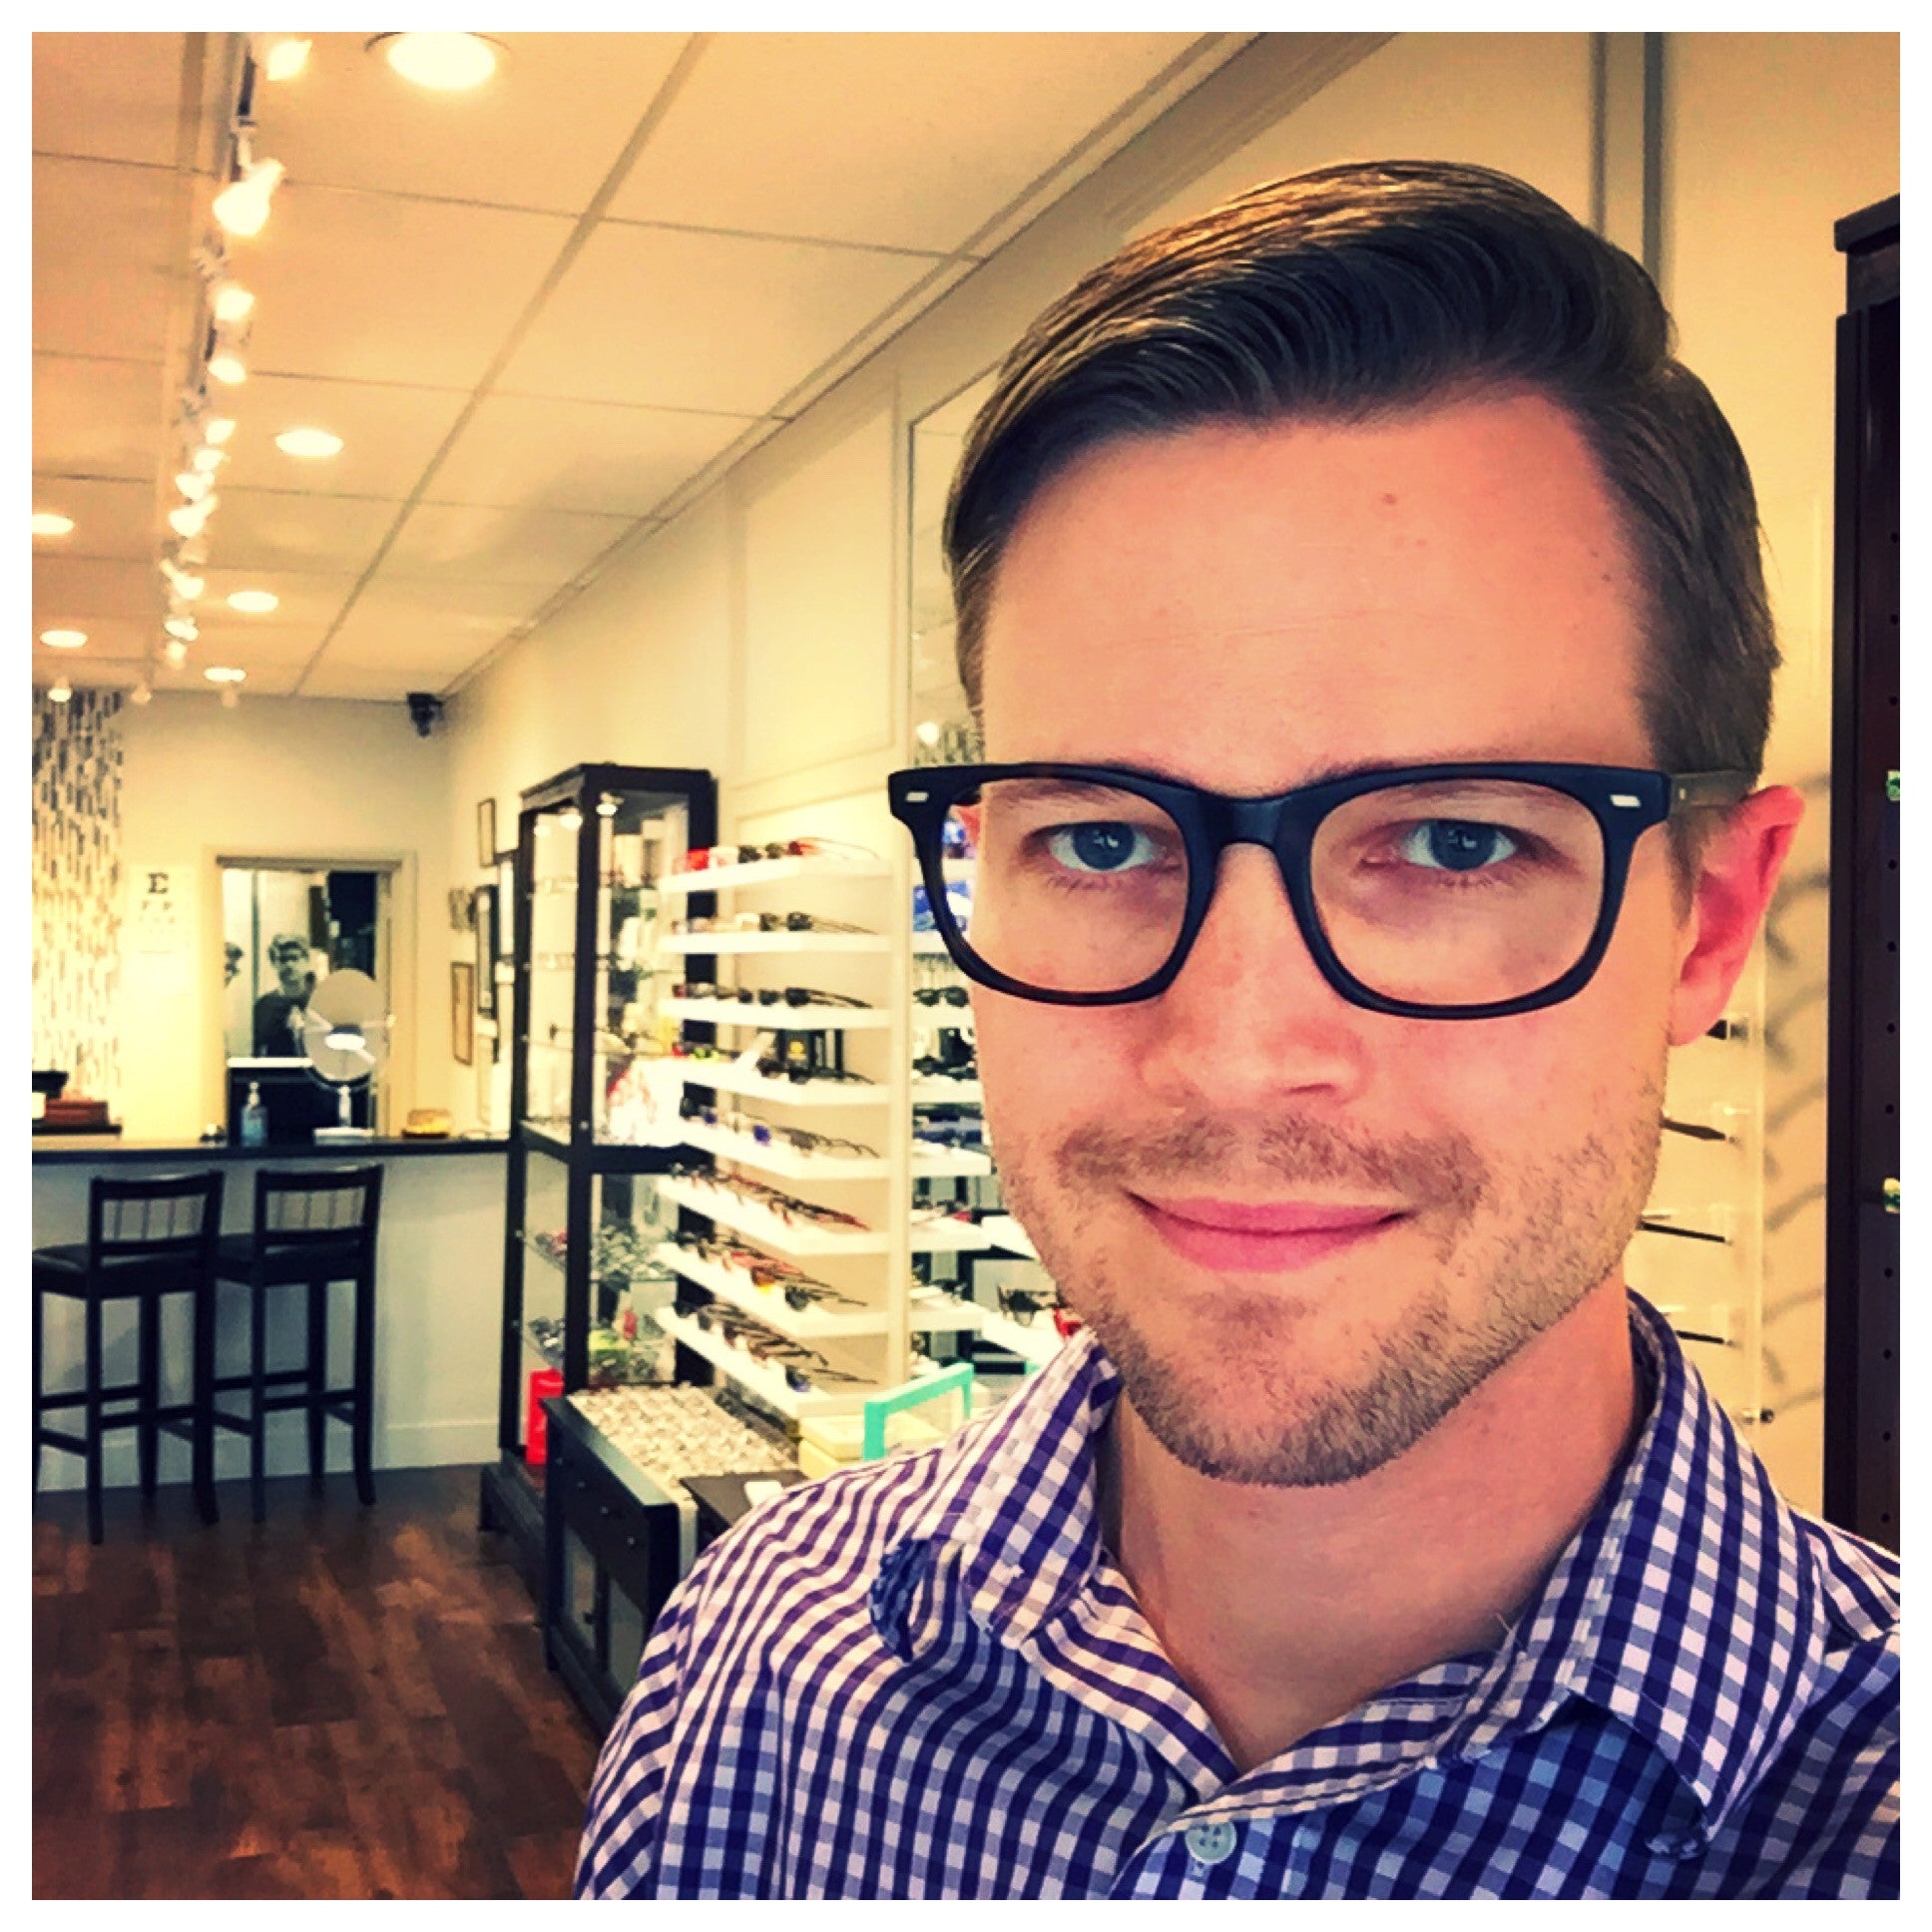 Hicks Brunson Eyewear Blog Masunaga 058 Eyeglasses